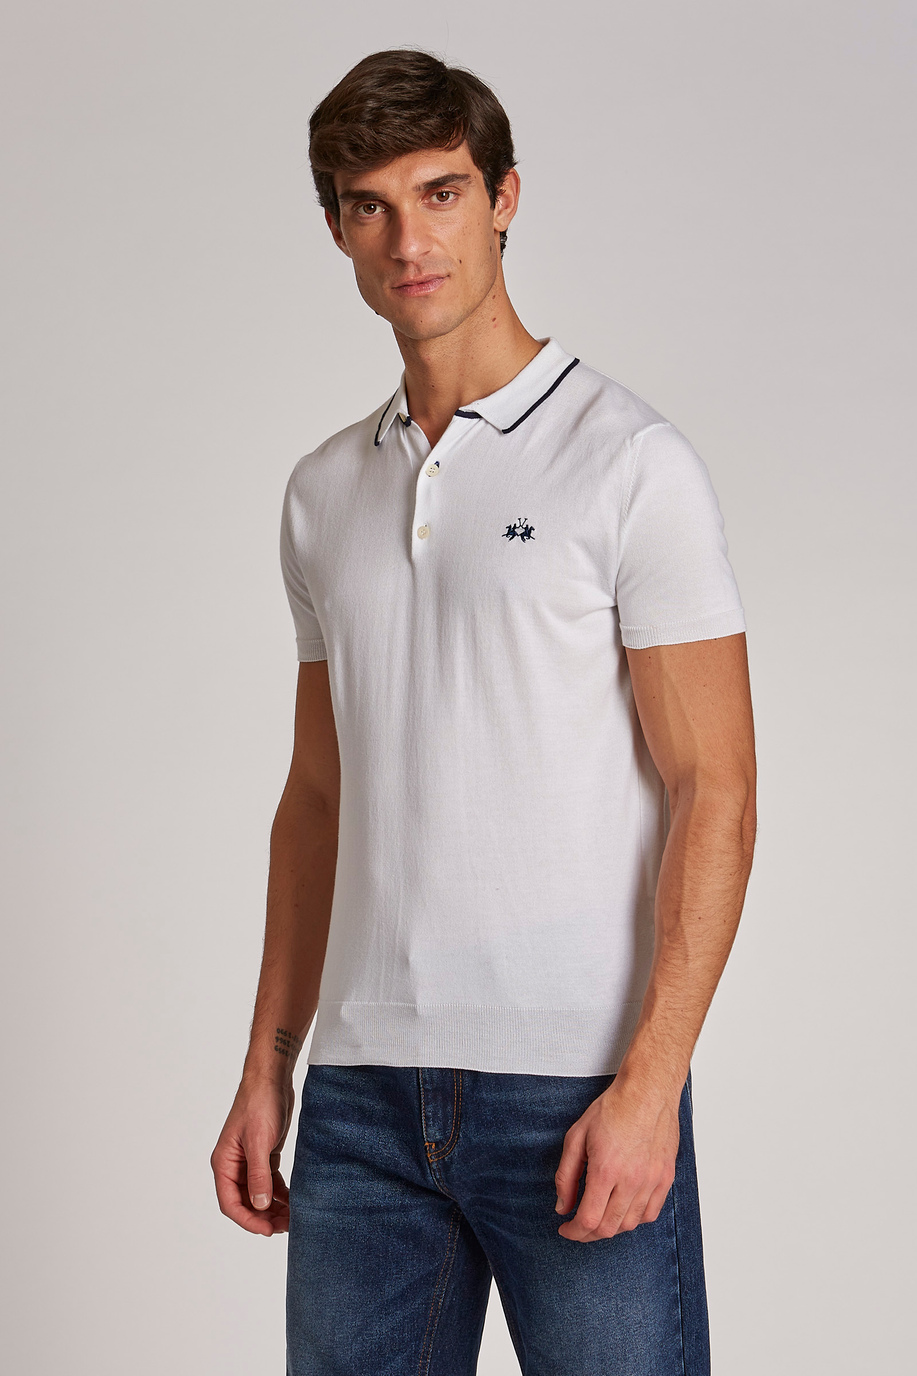 Herren-Poloshirt mit kurzen Ärmeln aus Baumwolle im Regular Fit - Klassische Basics | La Martina - Official Online Shop